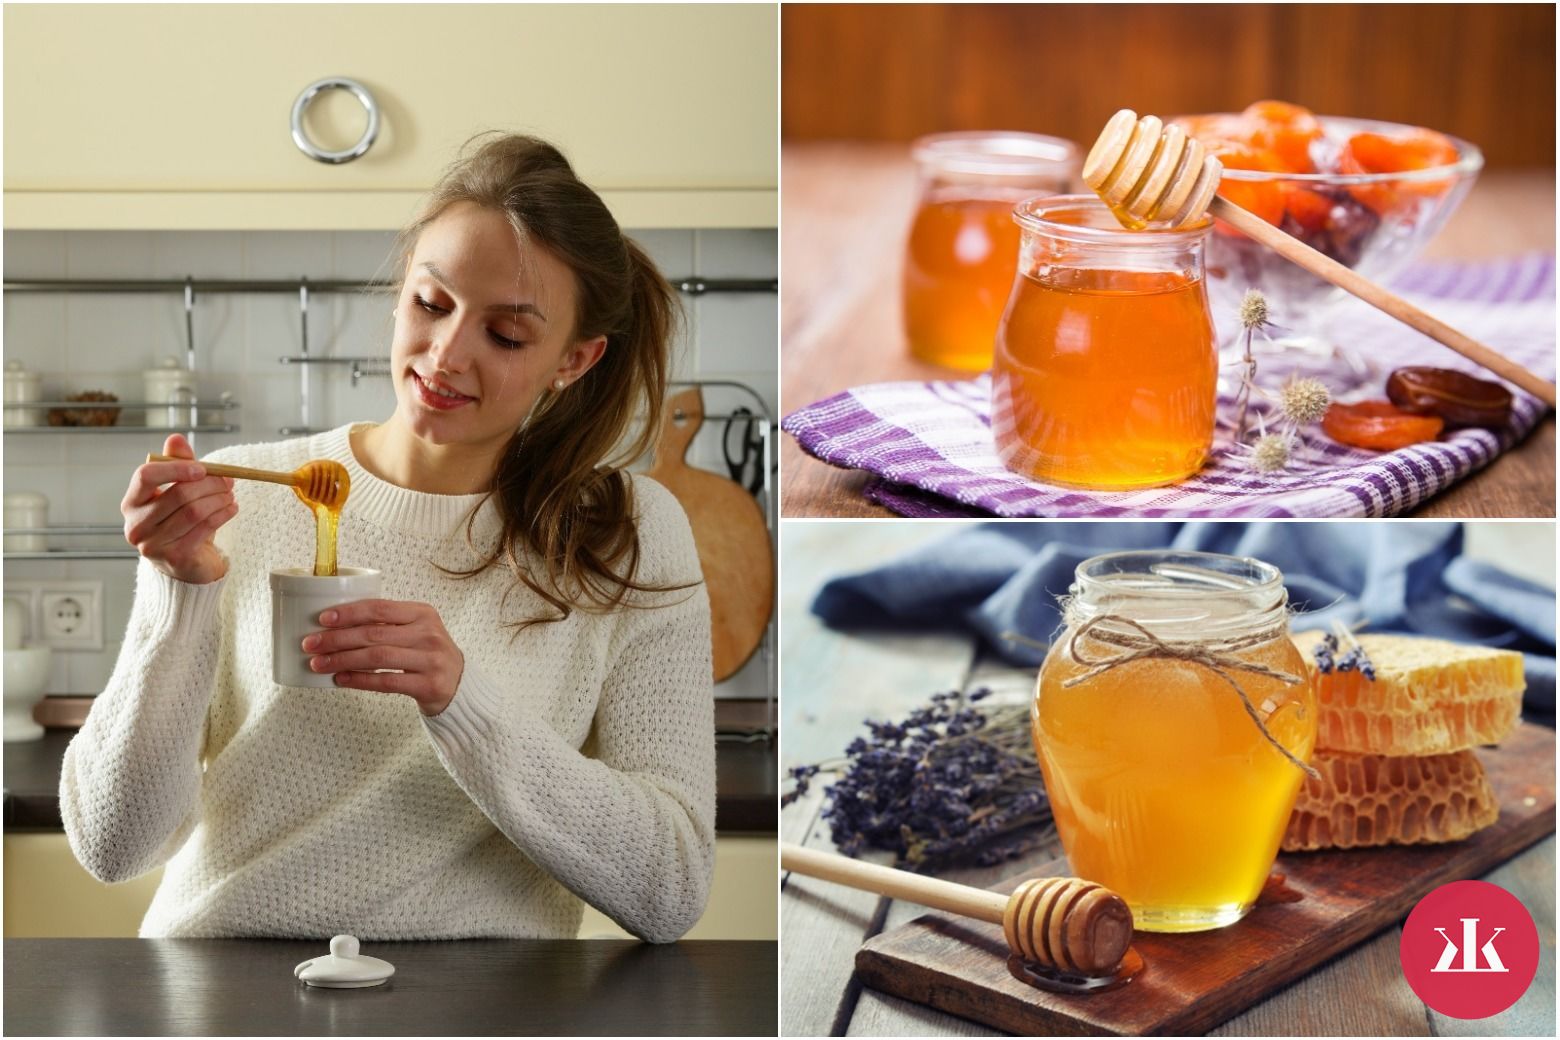 účinky medu